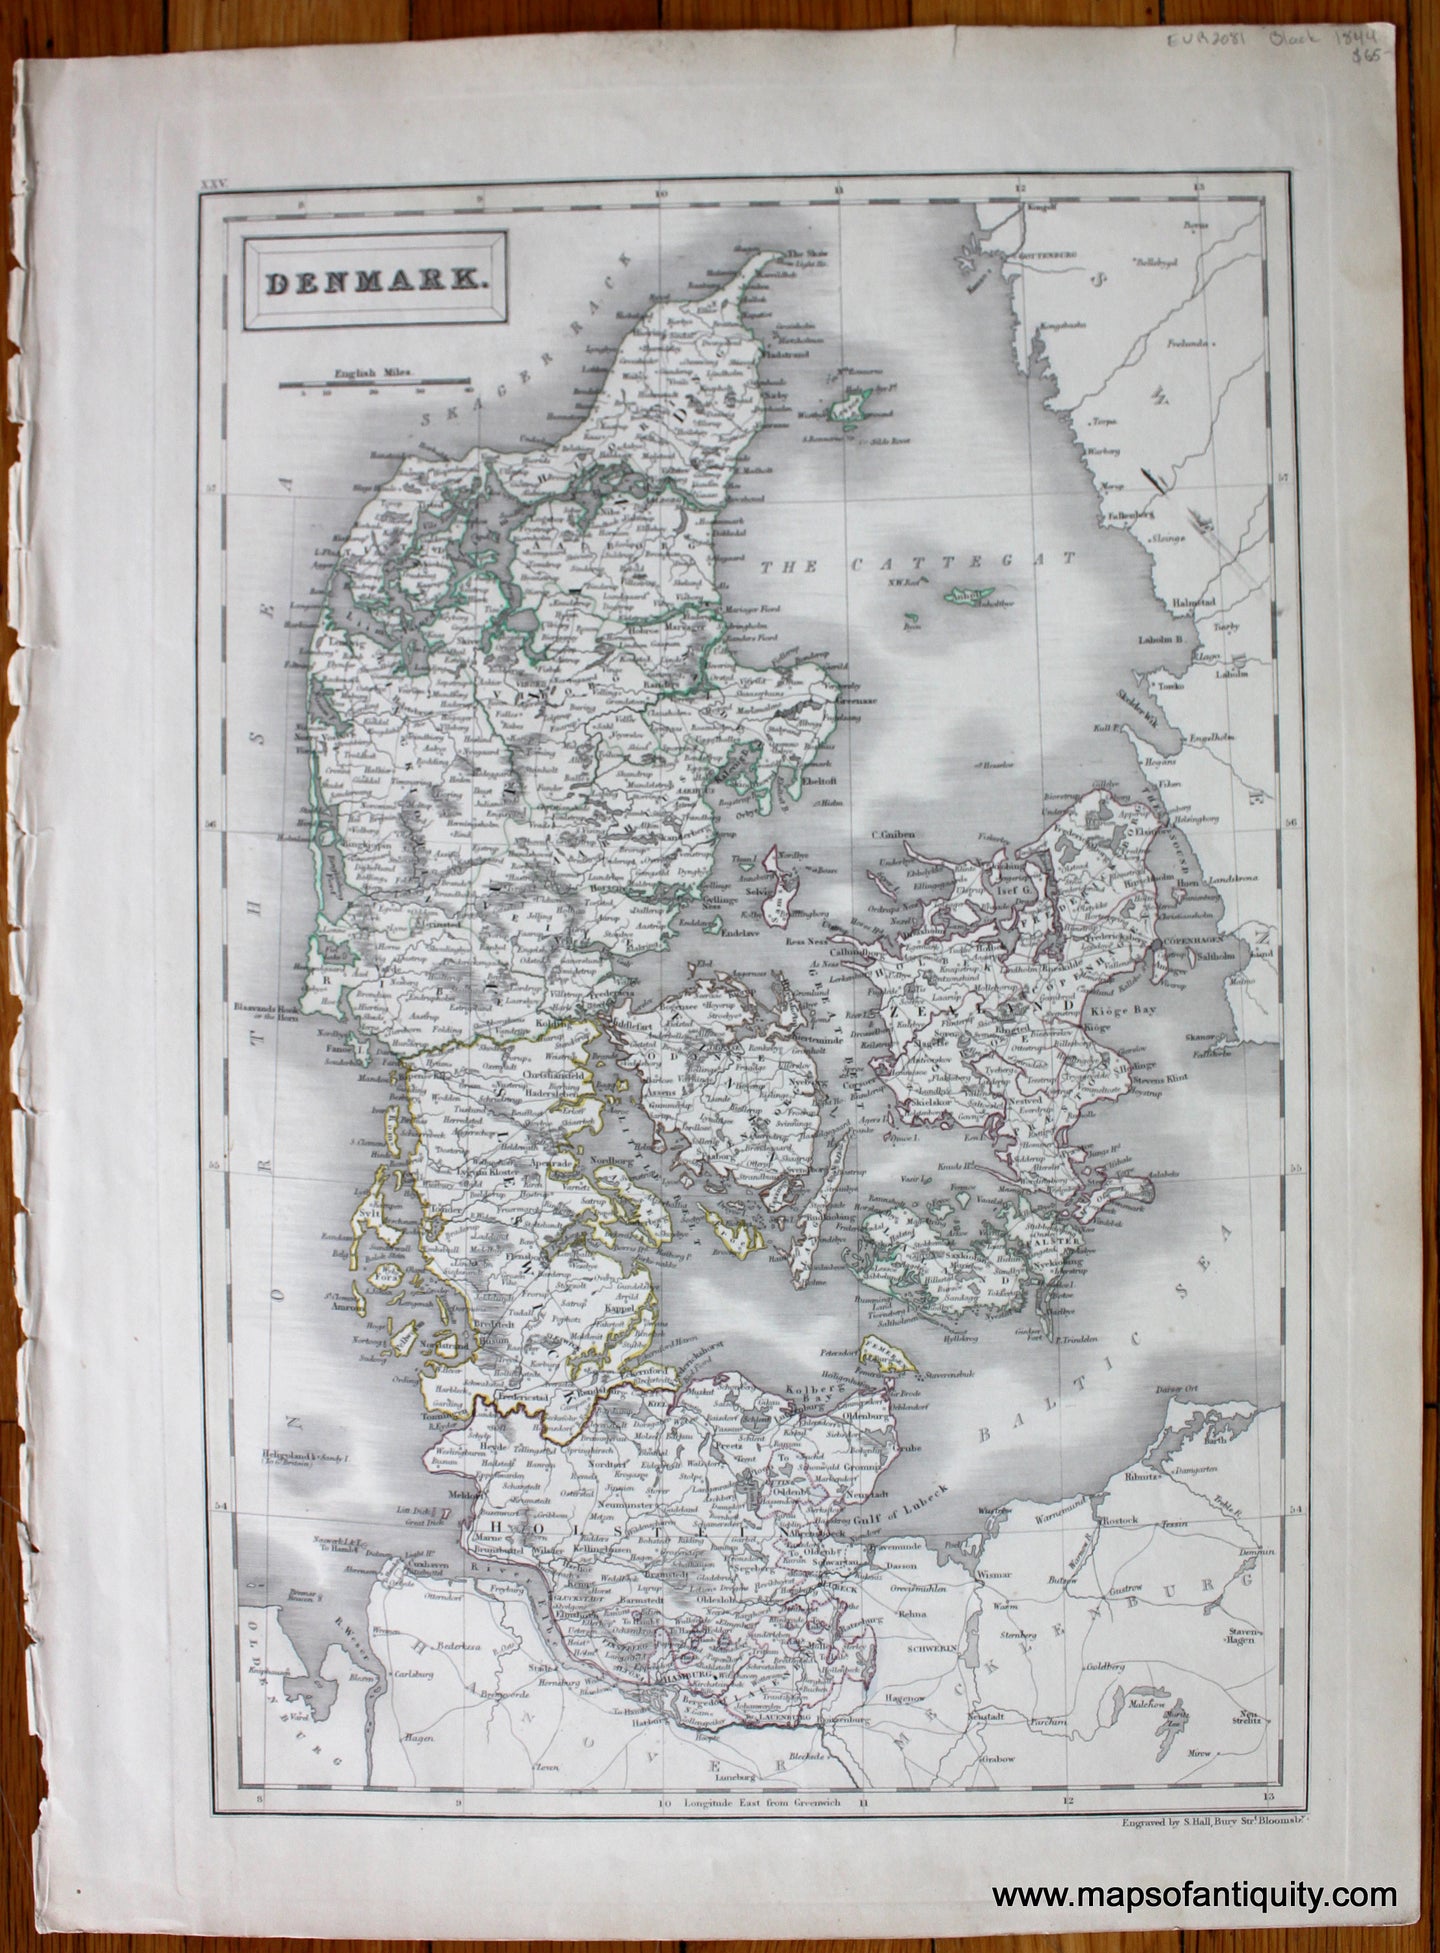 Antique-Hand-Colored-Map-Denmark.-Europe-Denmark-1844-Black-Maps-Of-Antiquity